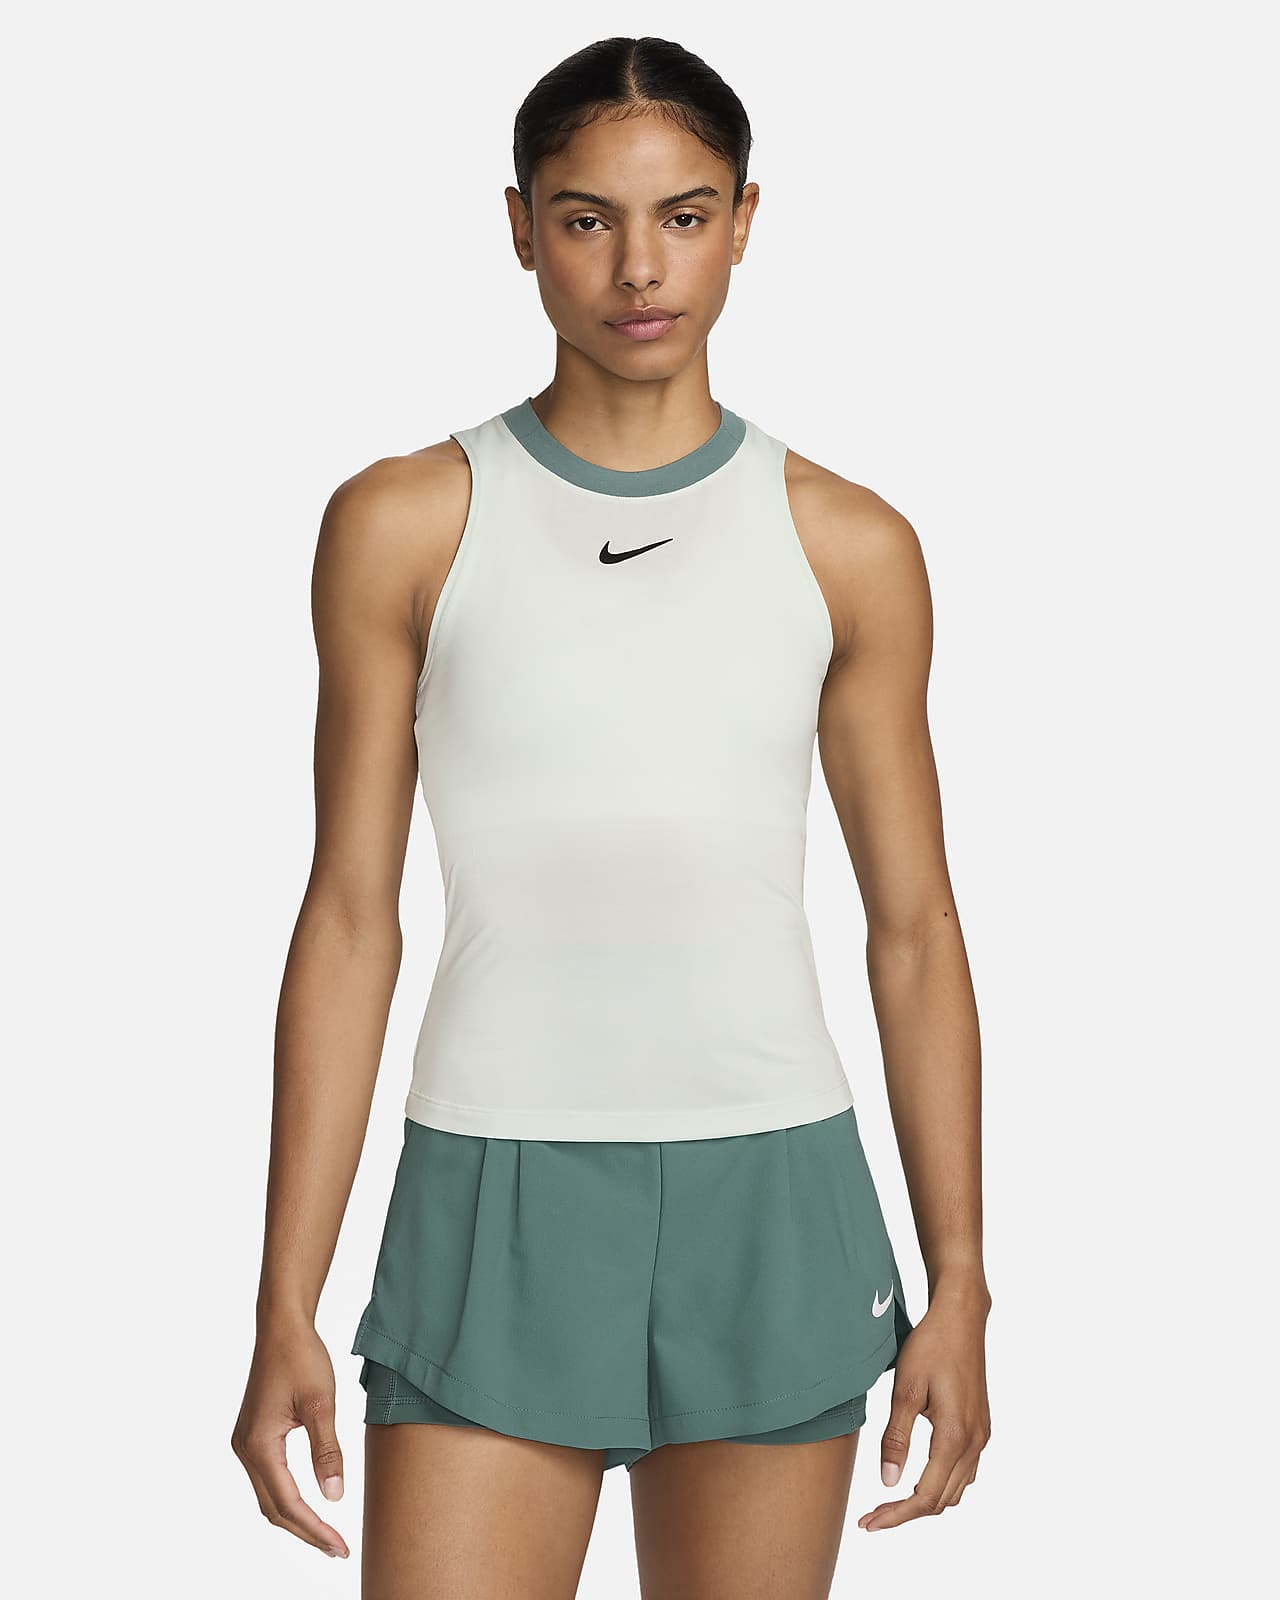 Nike Dri-FIT Women's Racerback Tank Top Shirt